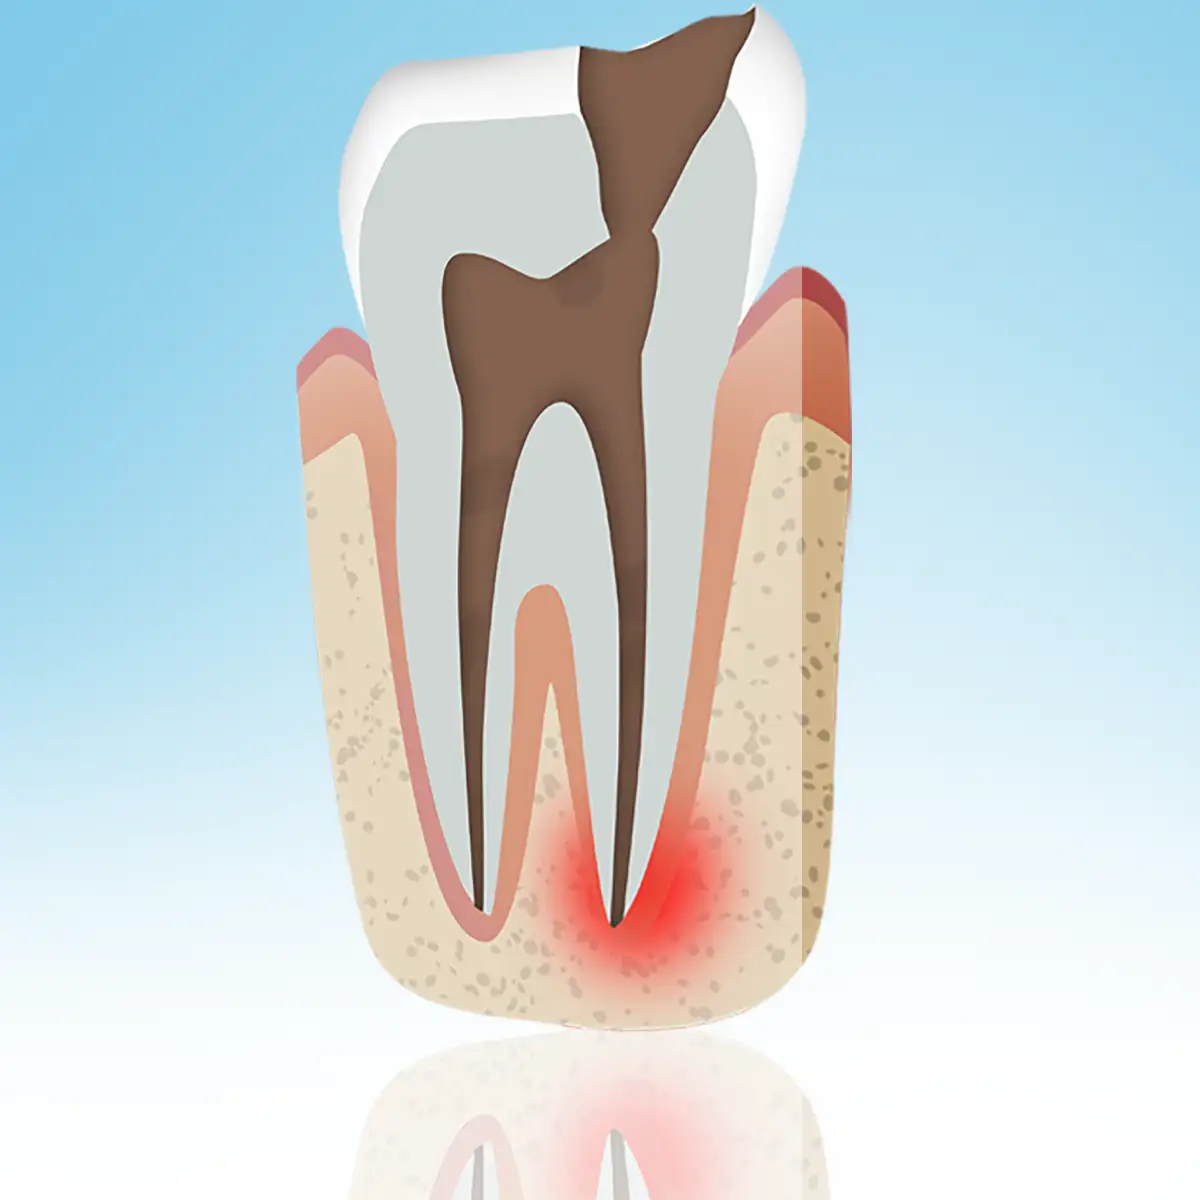 rotfylling illustrasjon hull i tann